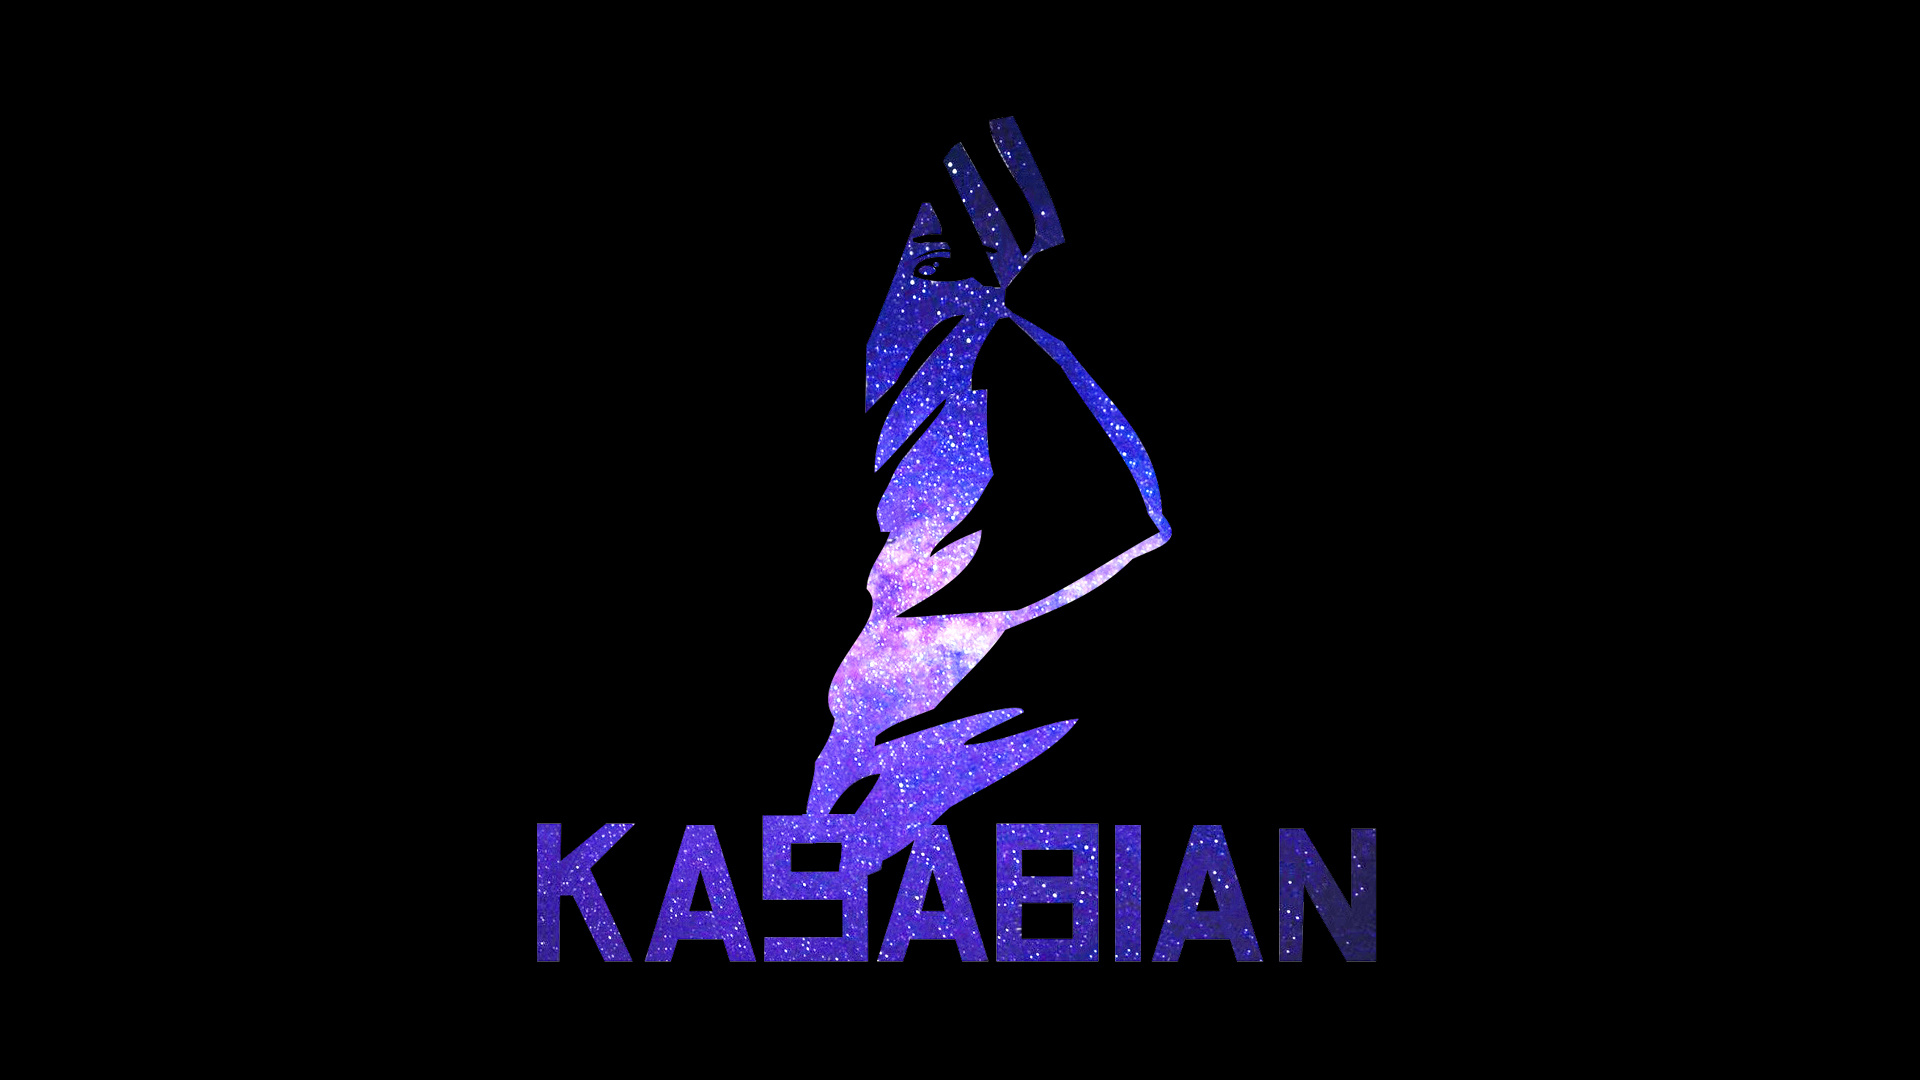 Kasabian 1920x1080